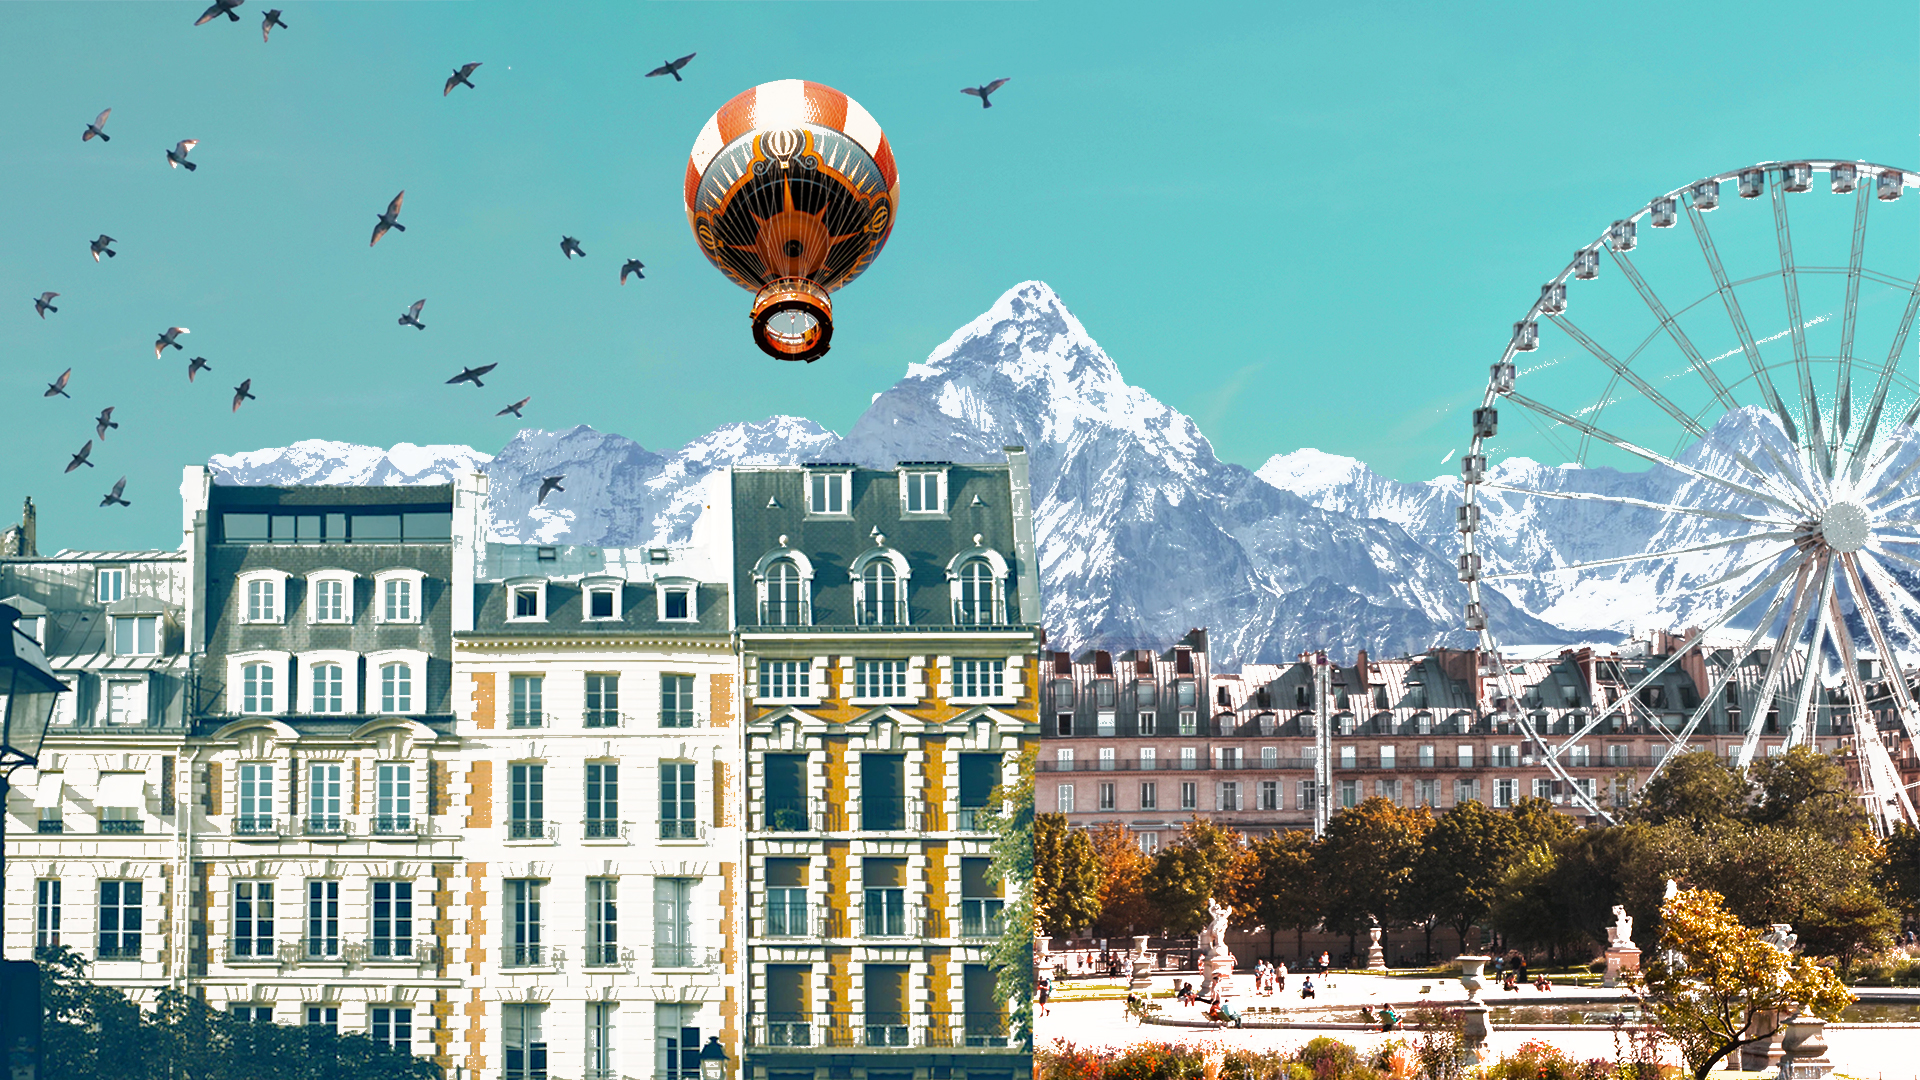 Collage of European buildings, mountain backdrop, hot air balloon and ferris wheel